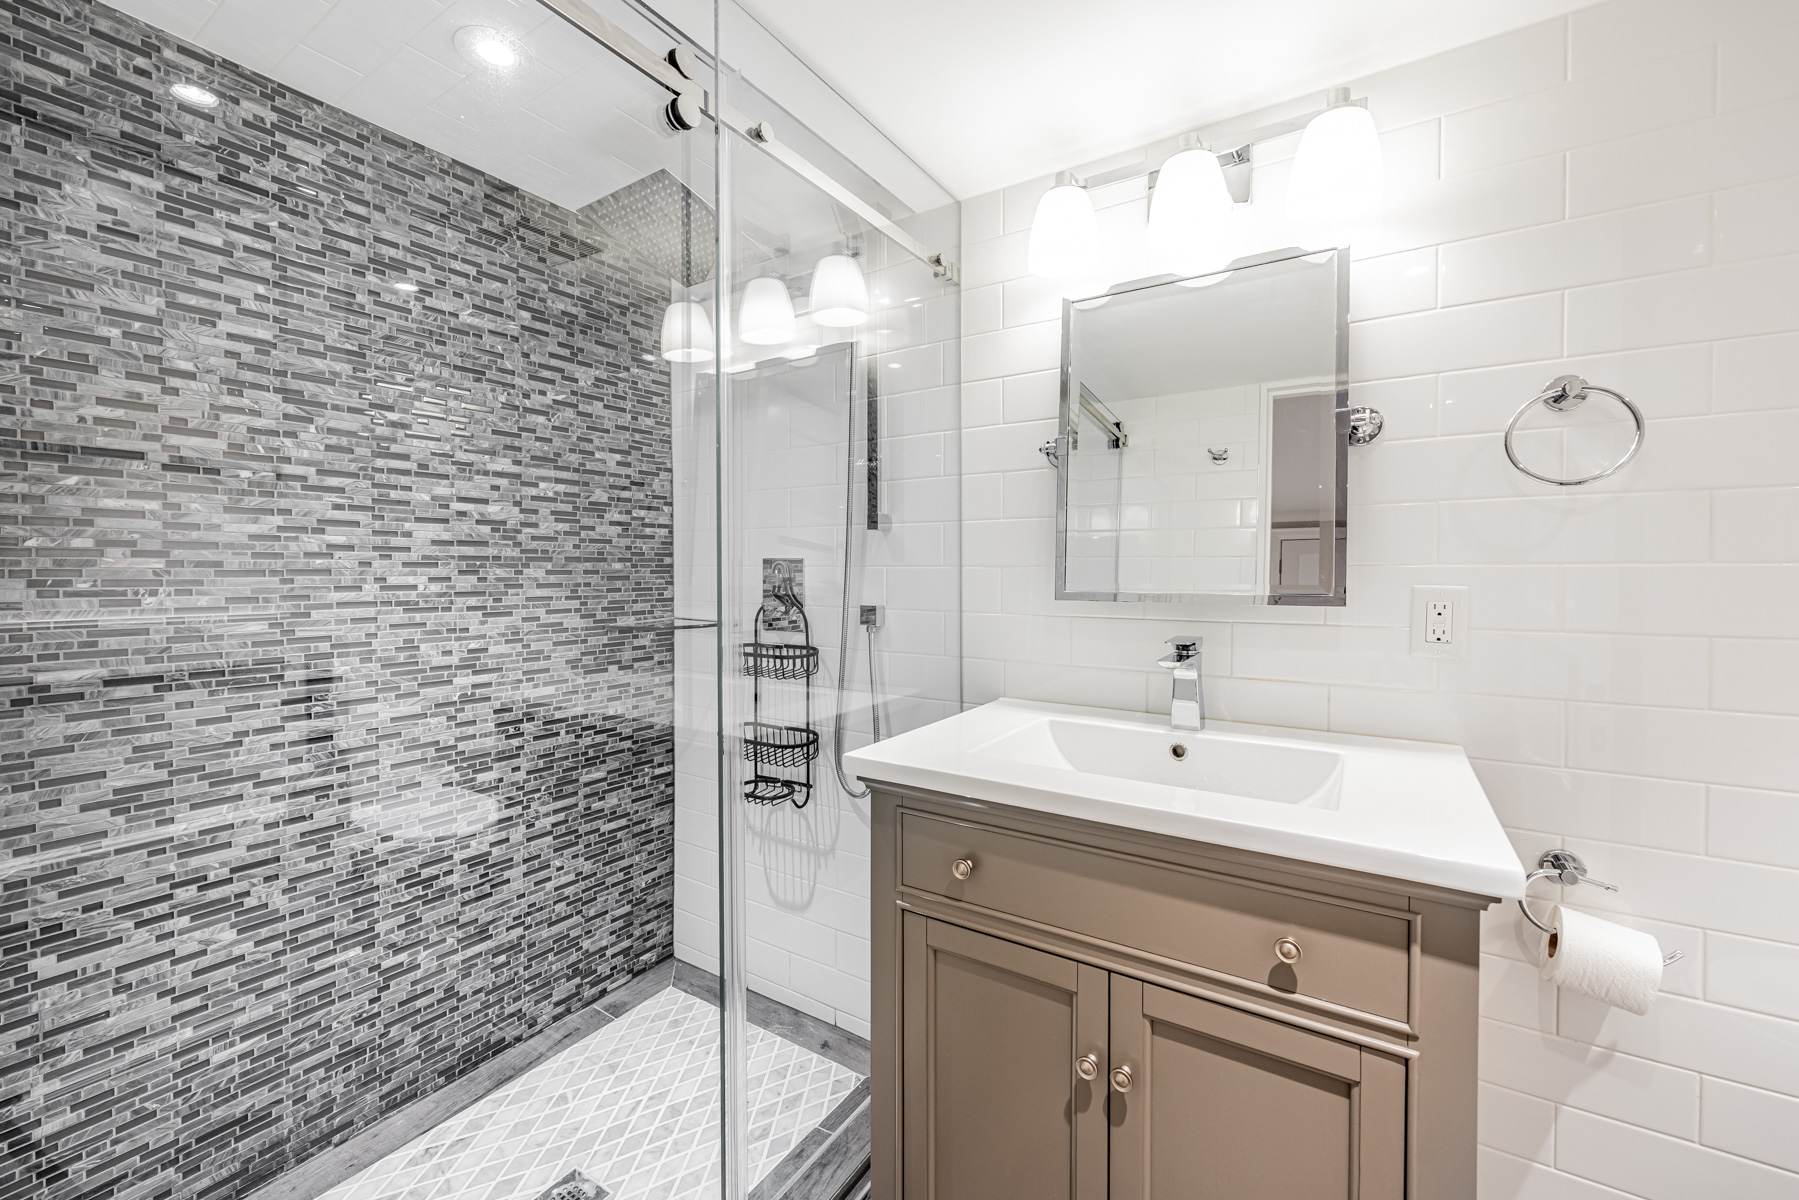 Basement bath with frameless glass door, vanity, intricate tiles and rain shower.